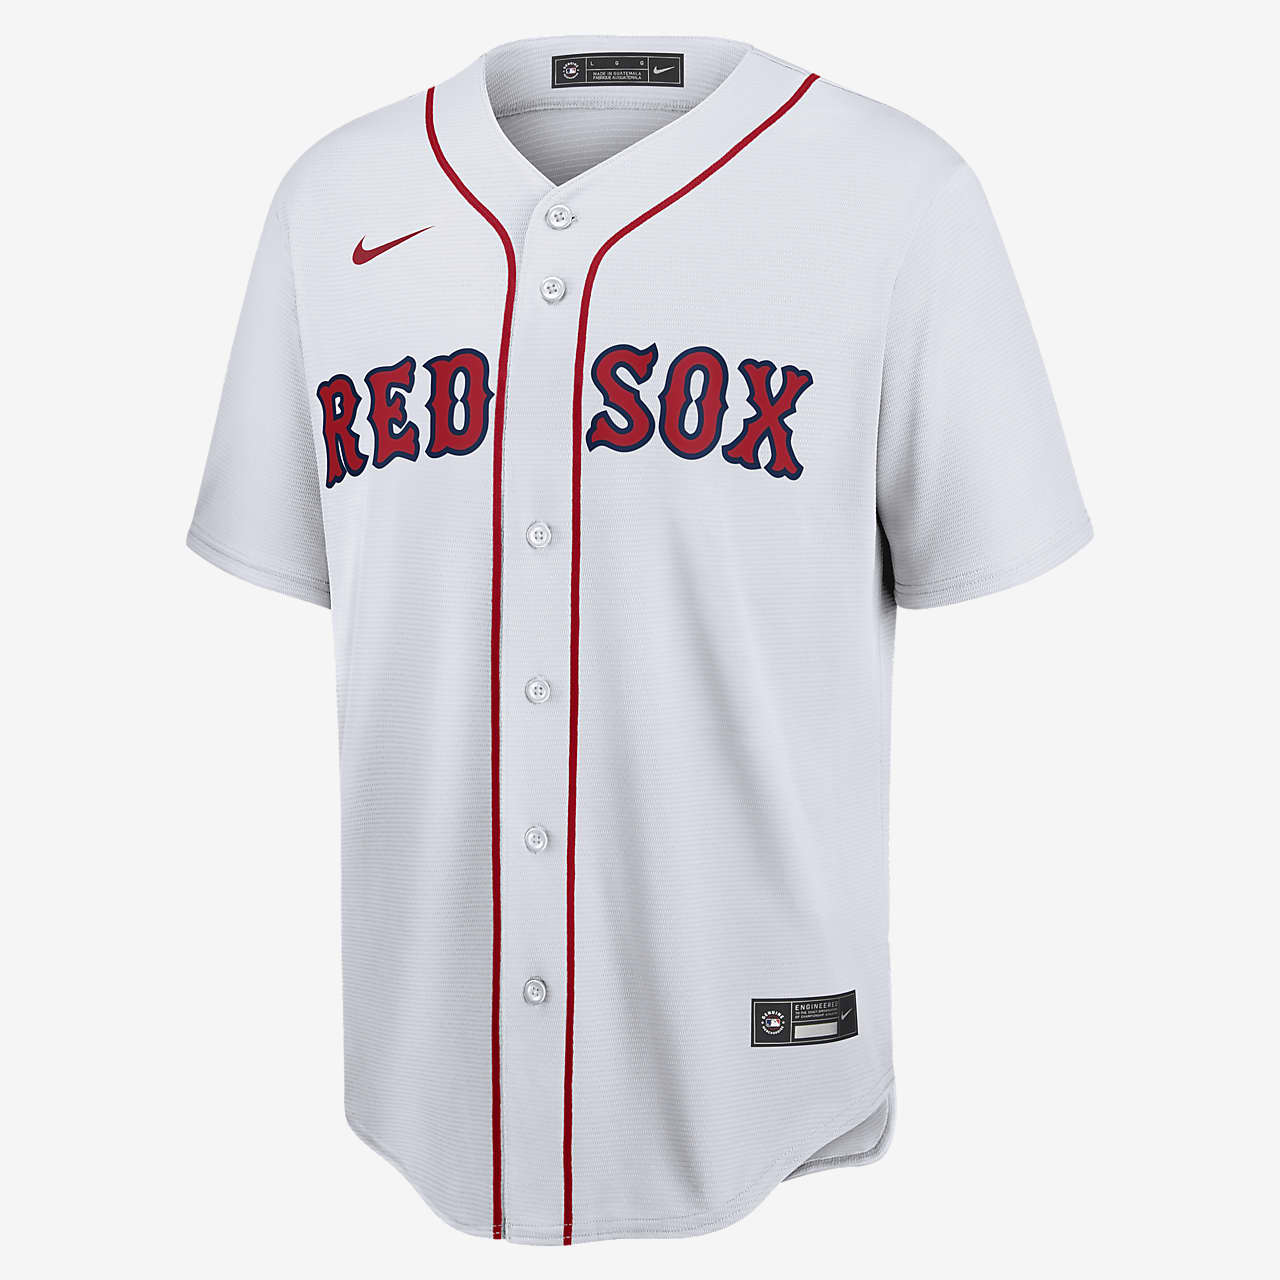 MLB Boston Red Sox (Andrew Benintendi 